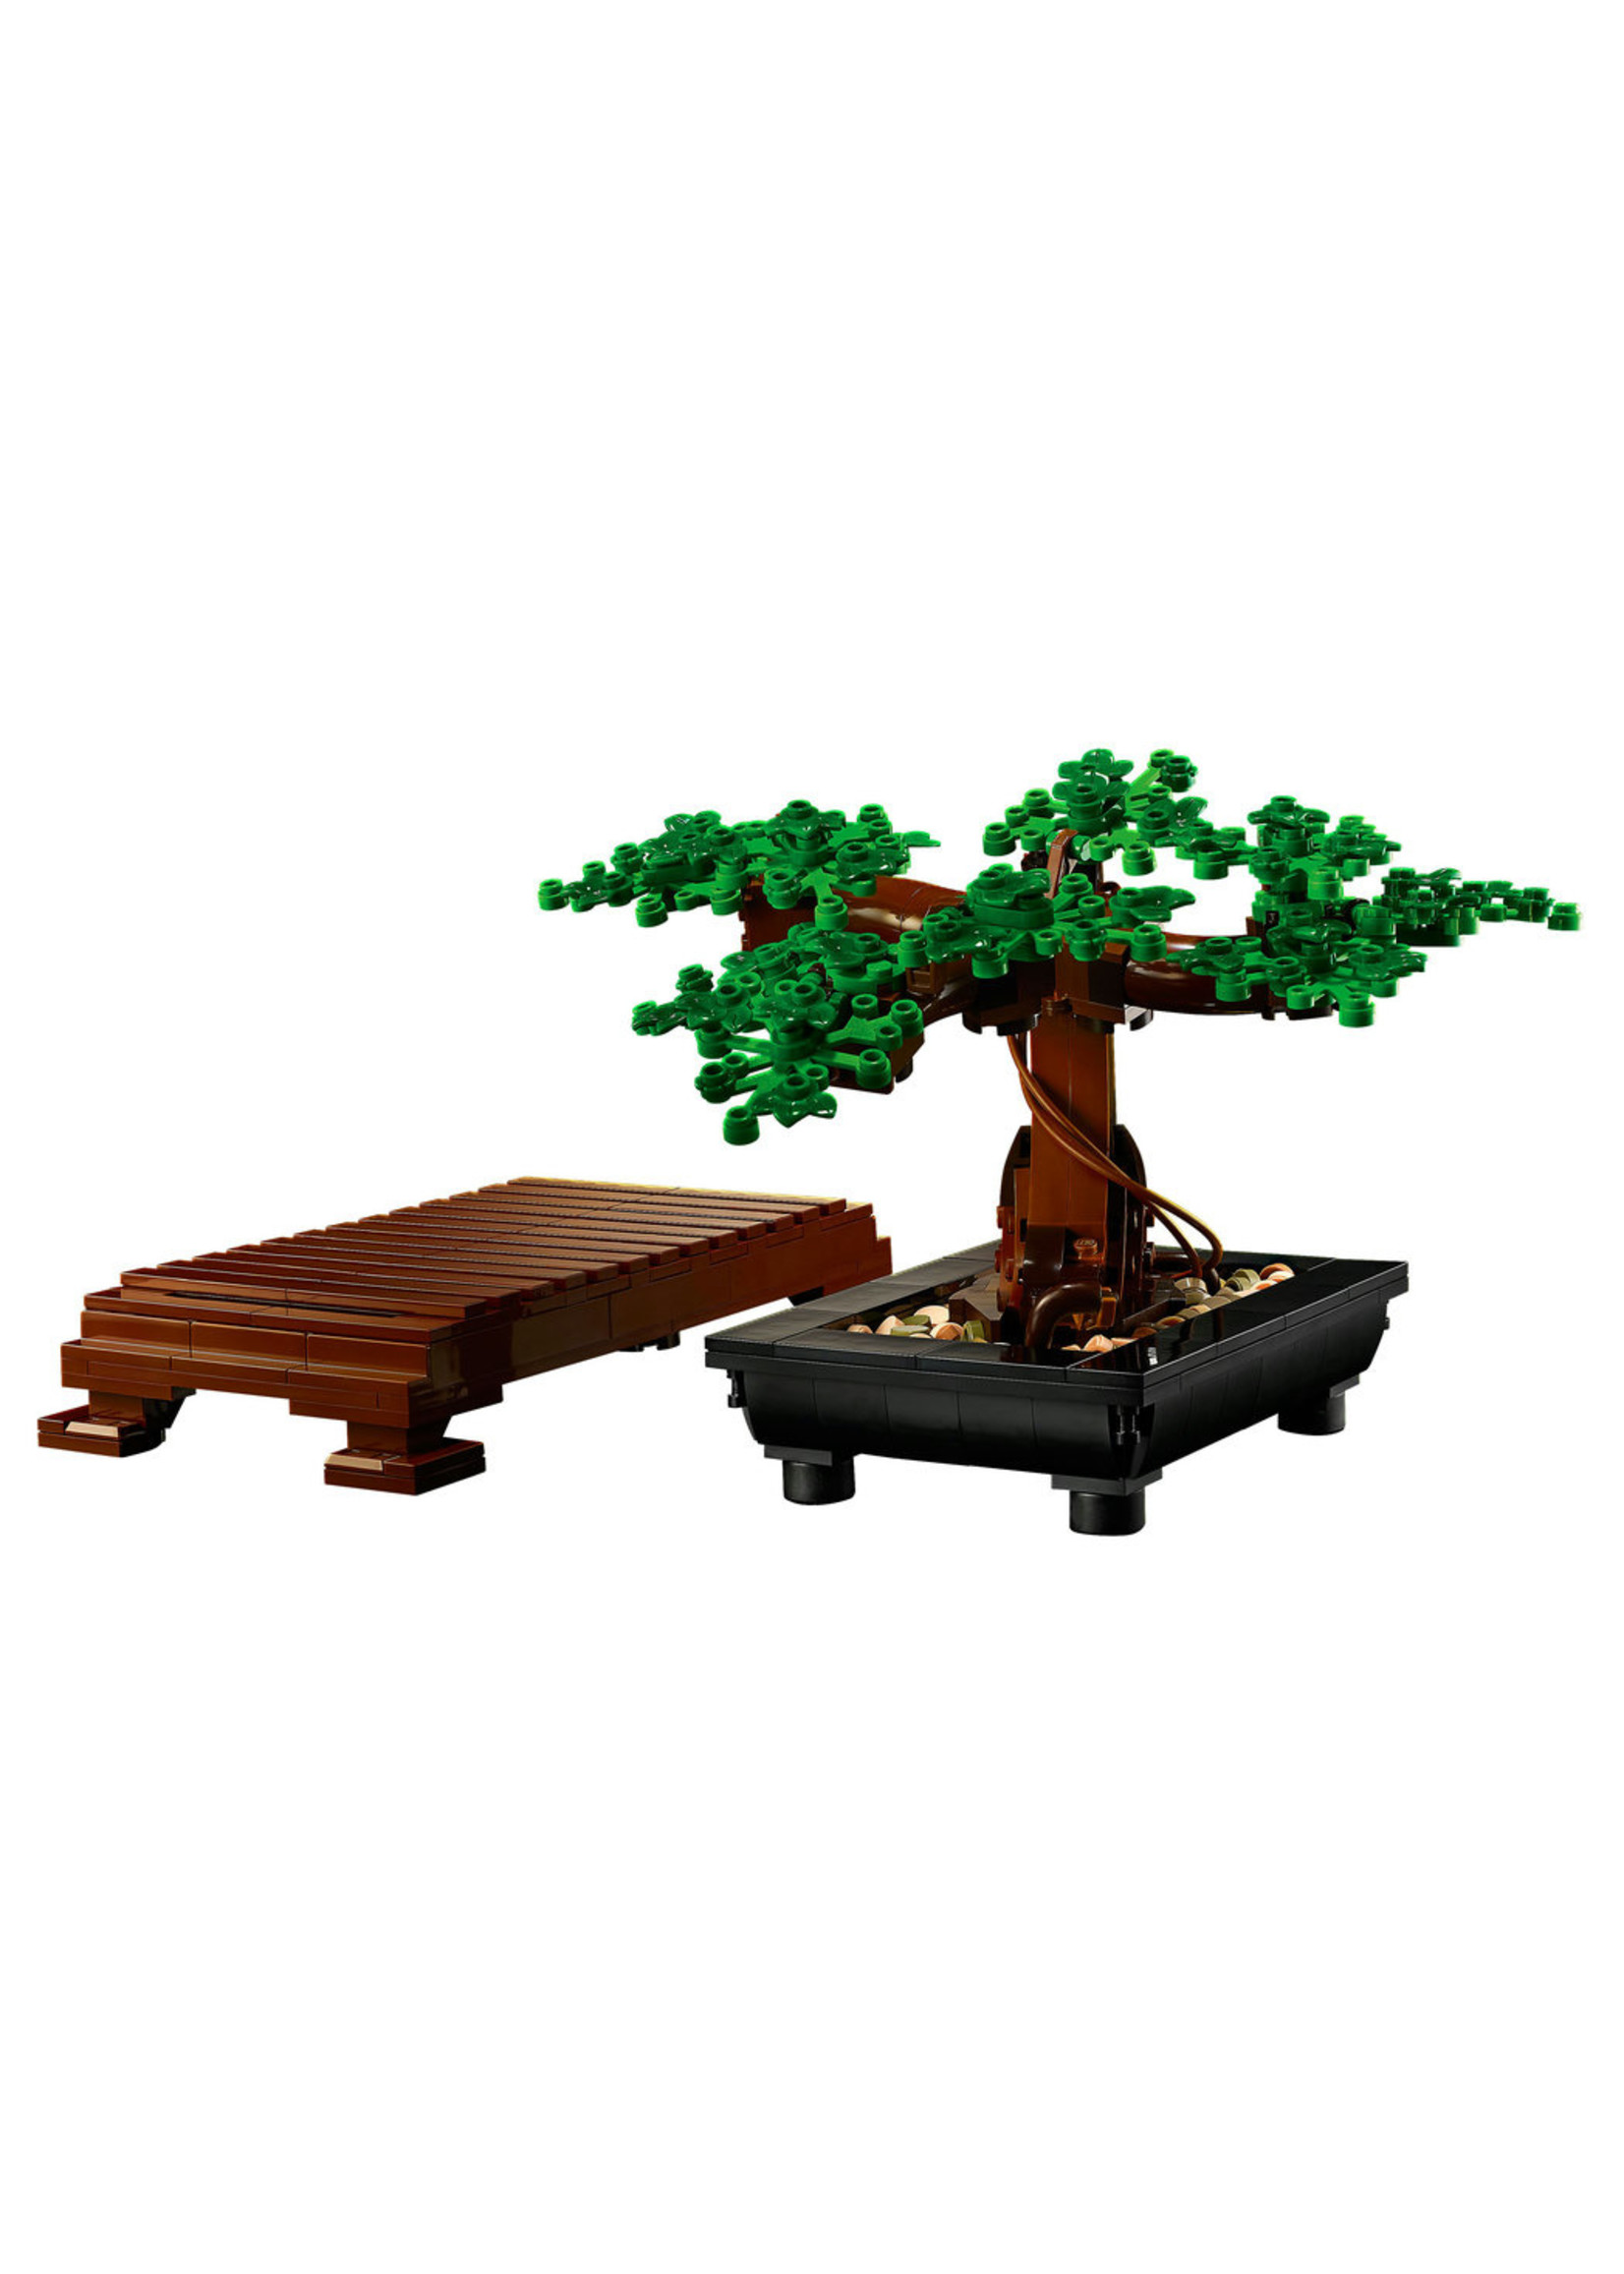 Modifying the bonsai tree  Lego tree, Cool lego creations, Lego